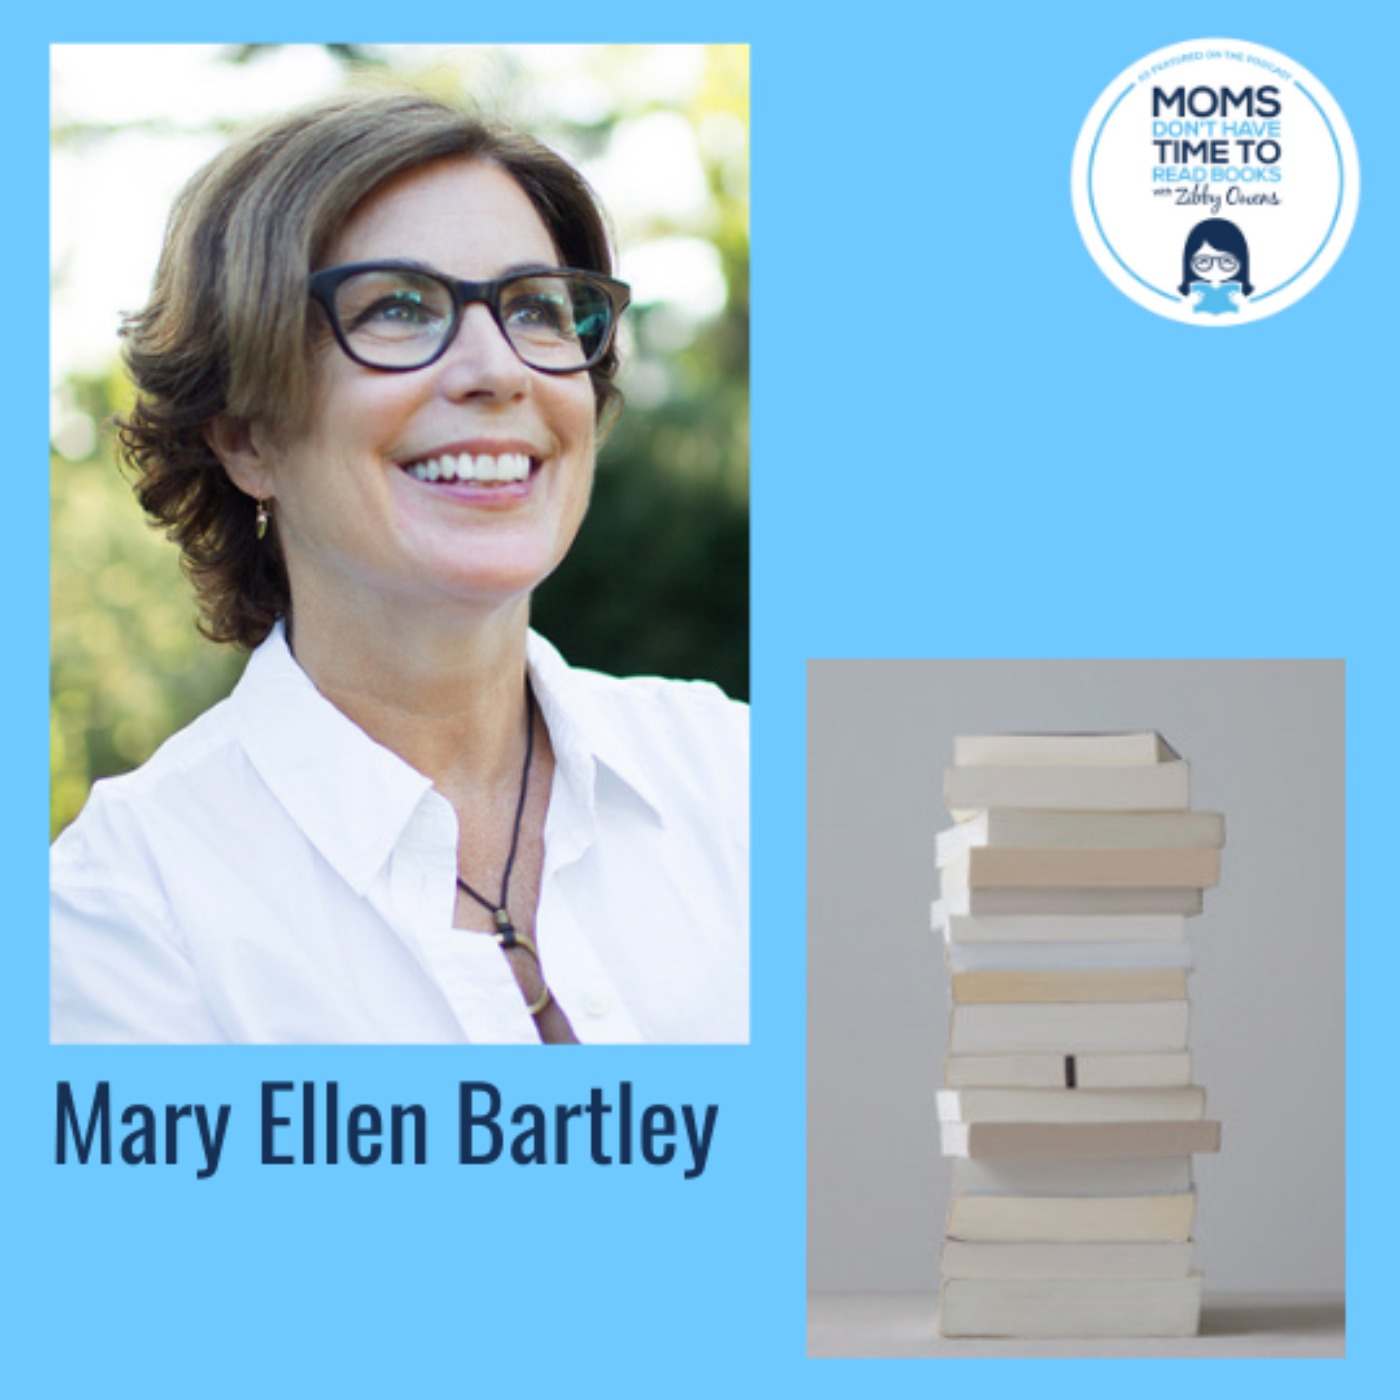 Mary Ellen Bartley, Photographer